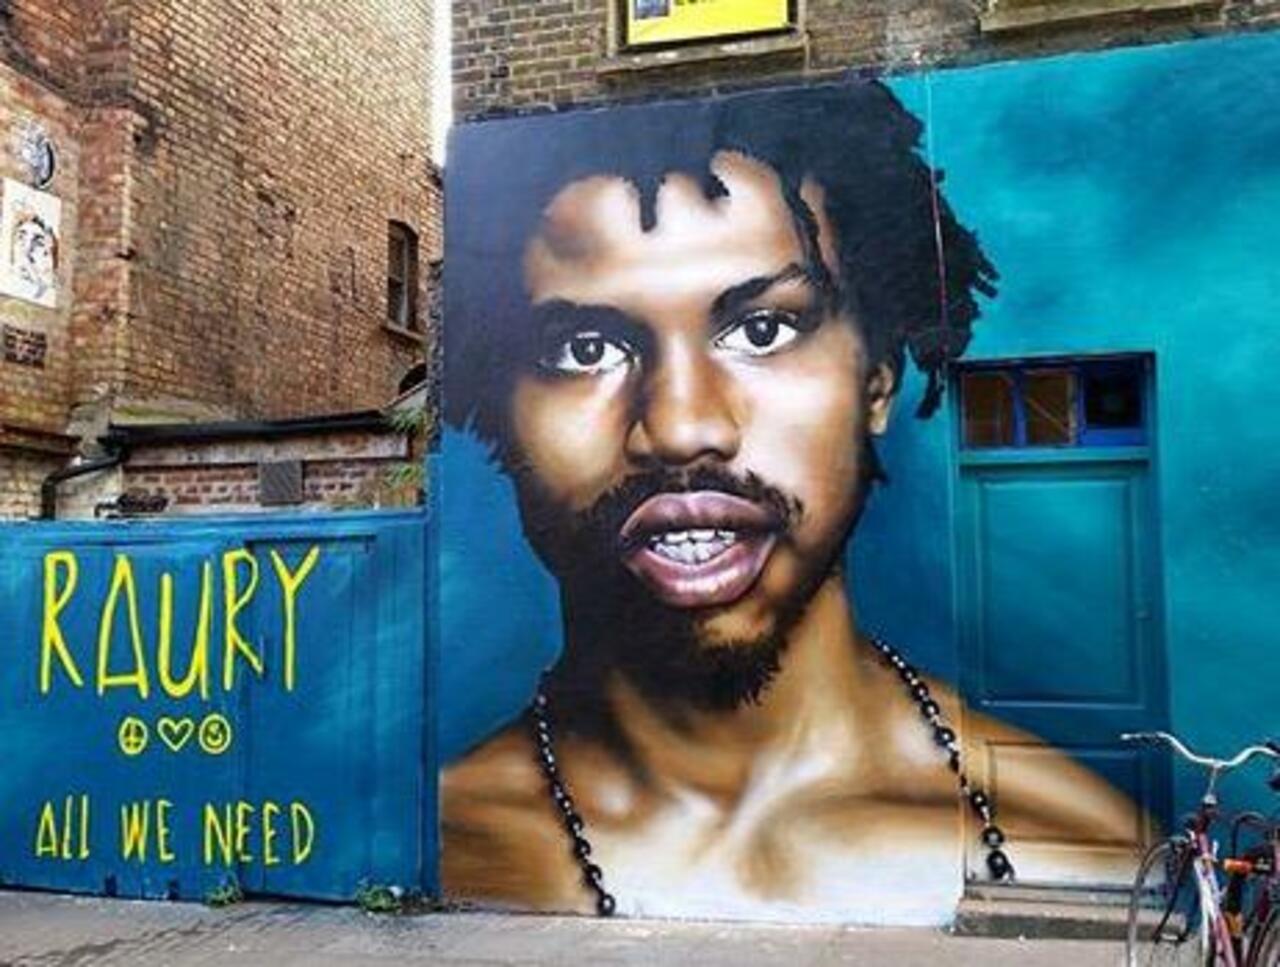 New Street Art of Raury by Olliver Switch in Brick Lane 

#art #graffiti #mural #streetart http://t.co/3zhtHsuUZt